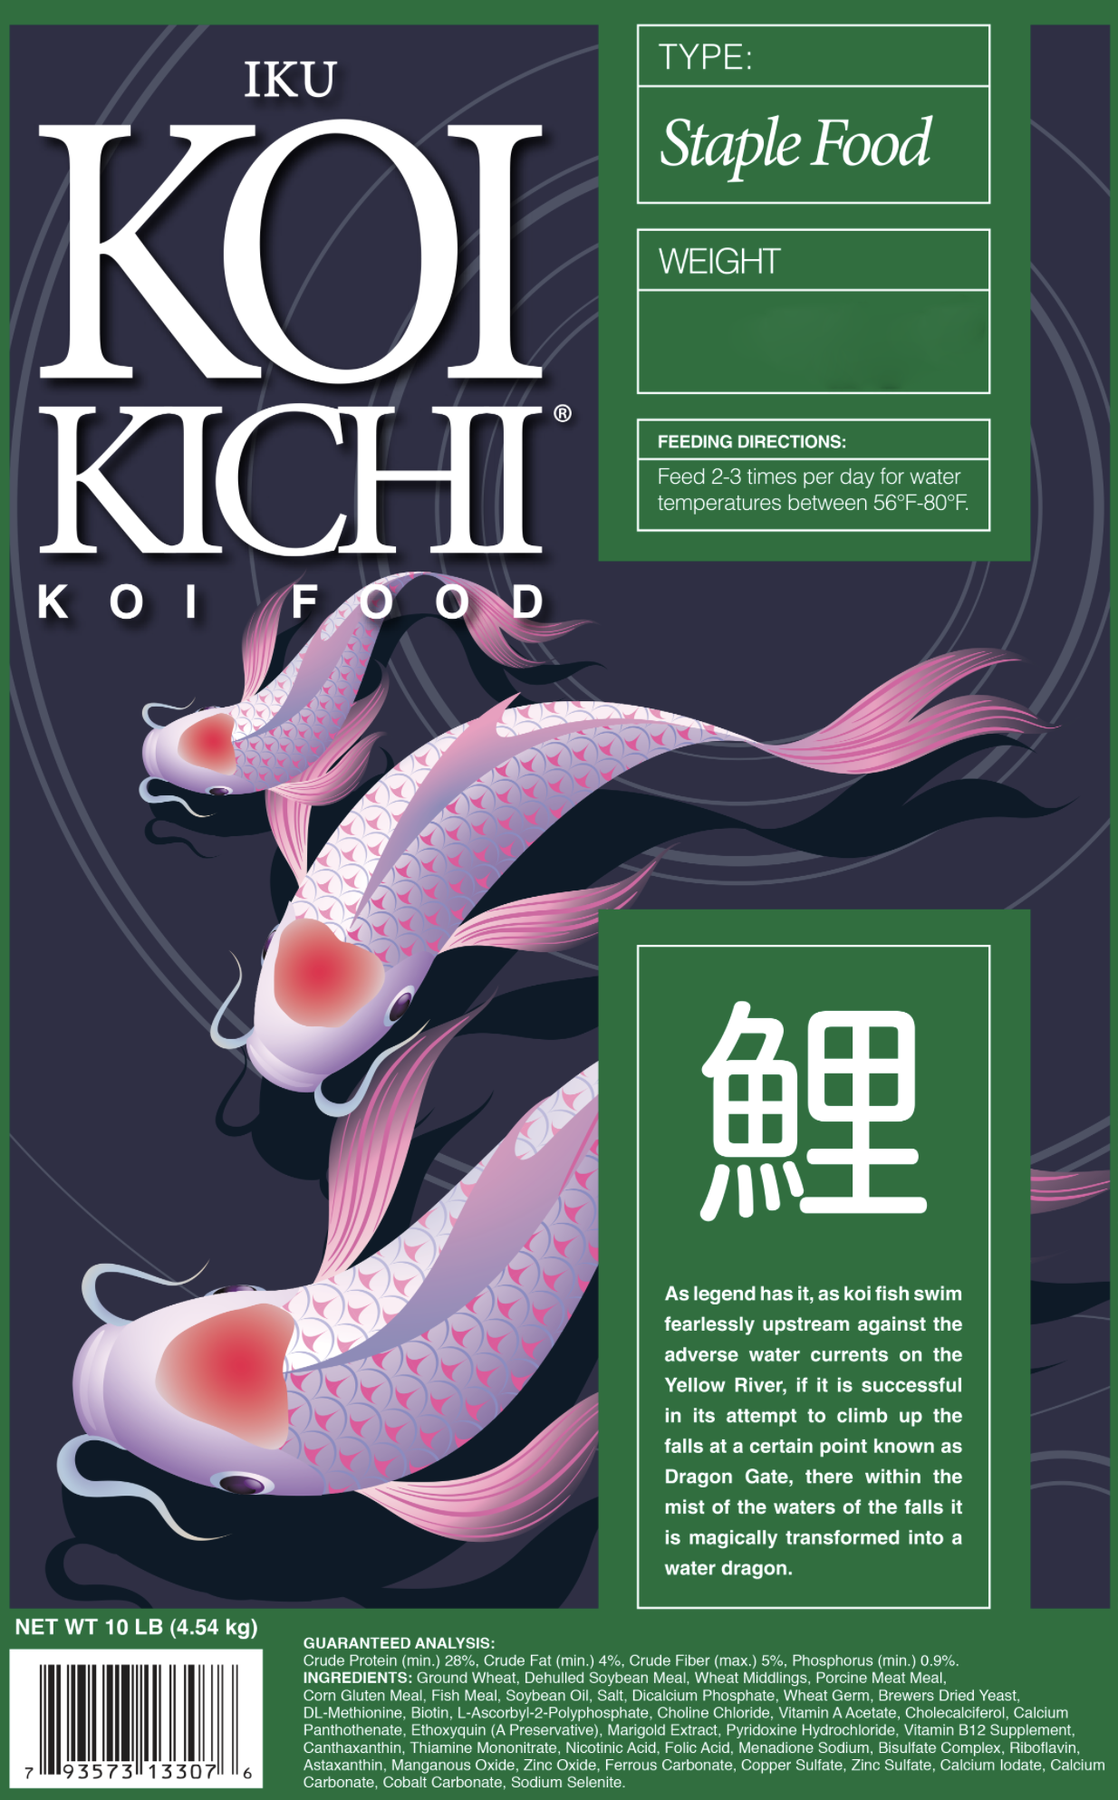 Iku Koi Kichi Staple Koi Fish Food - 40 lbs.